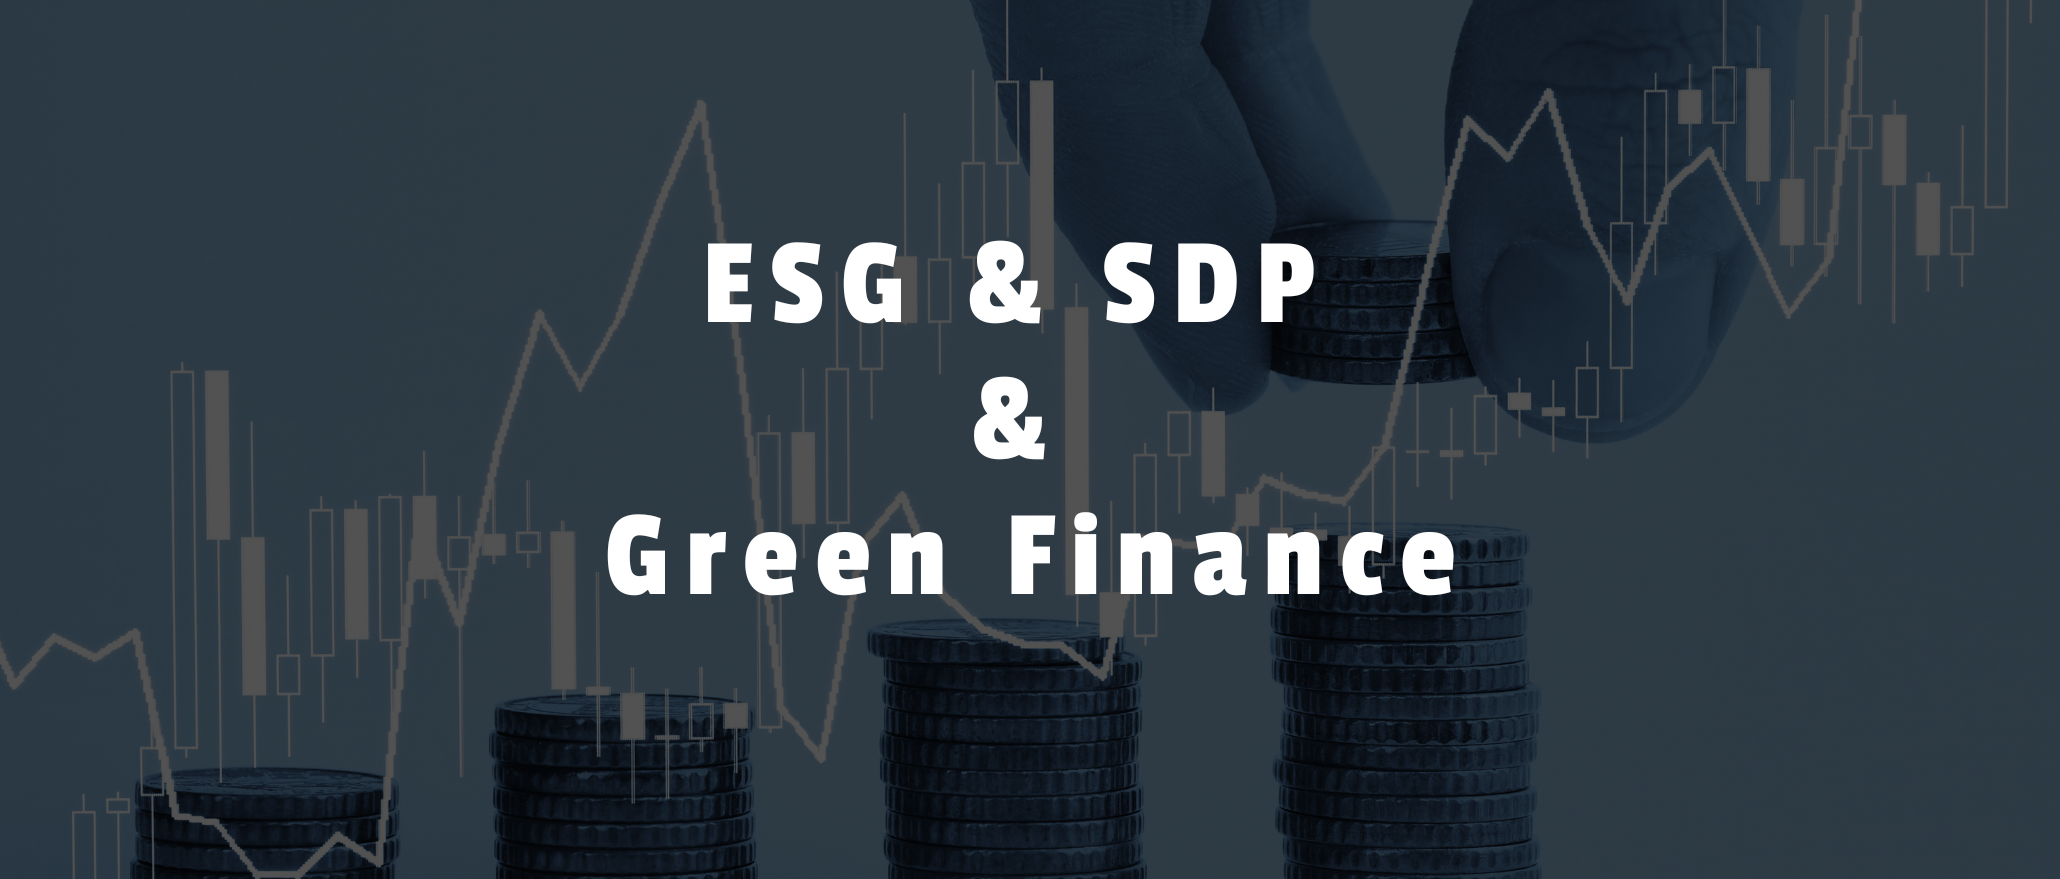 ESG & SDP & Sustainable Green Finance 可持續綠色金融